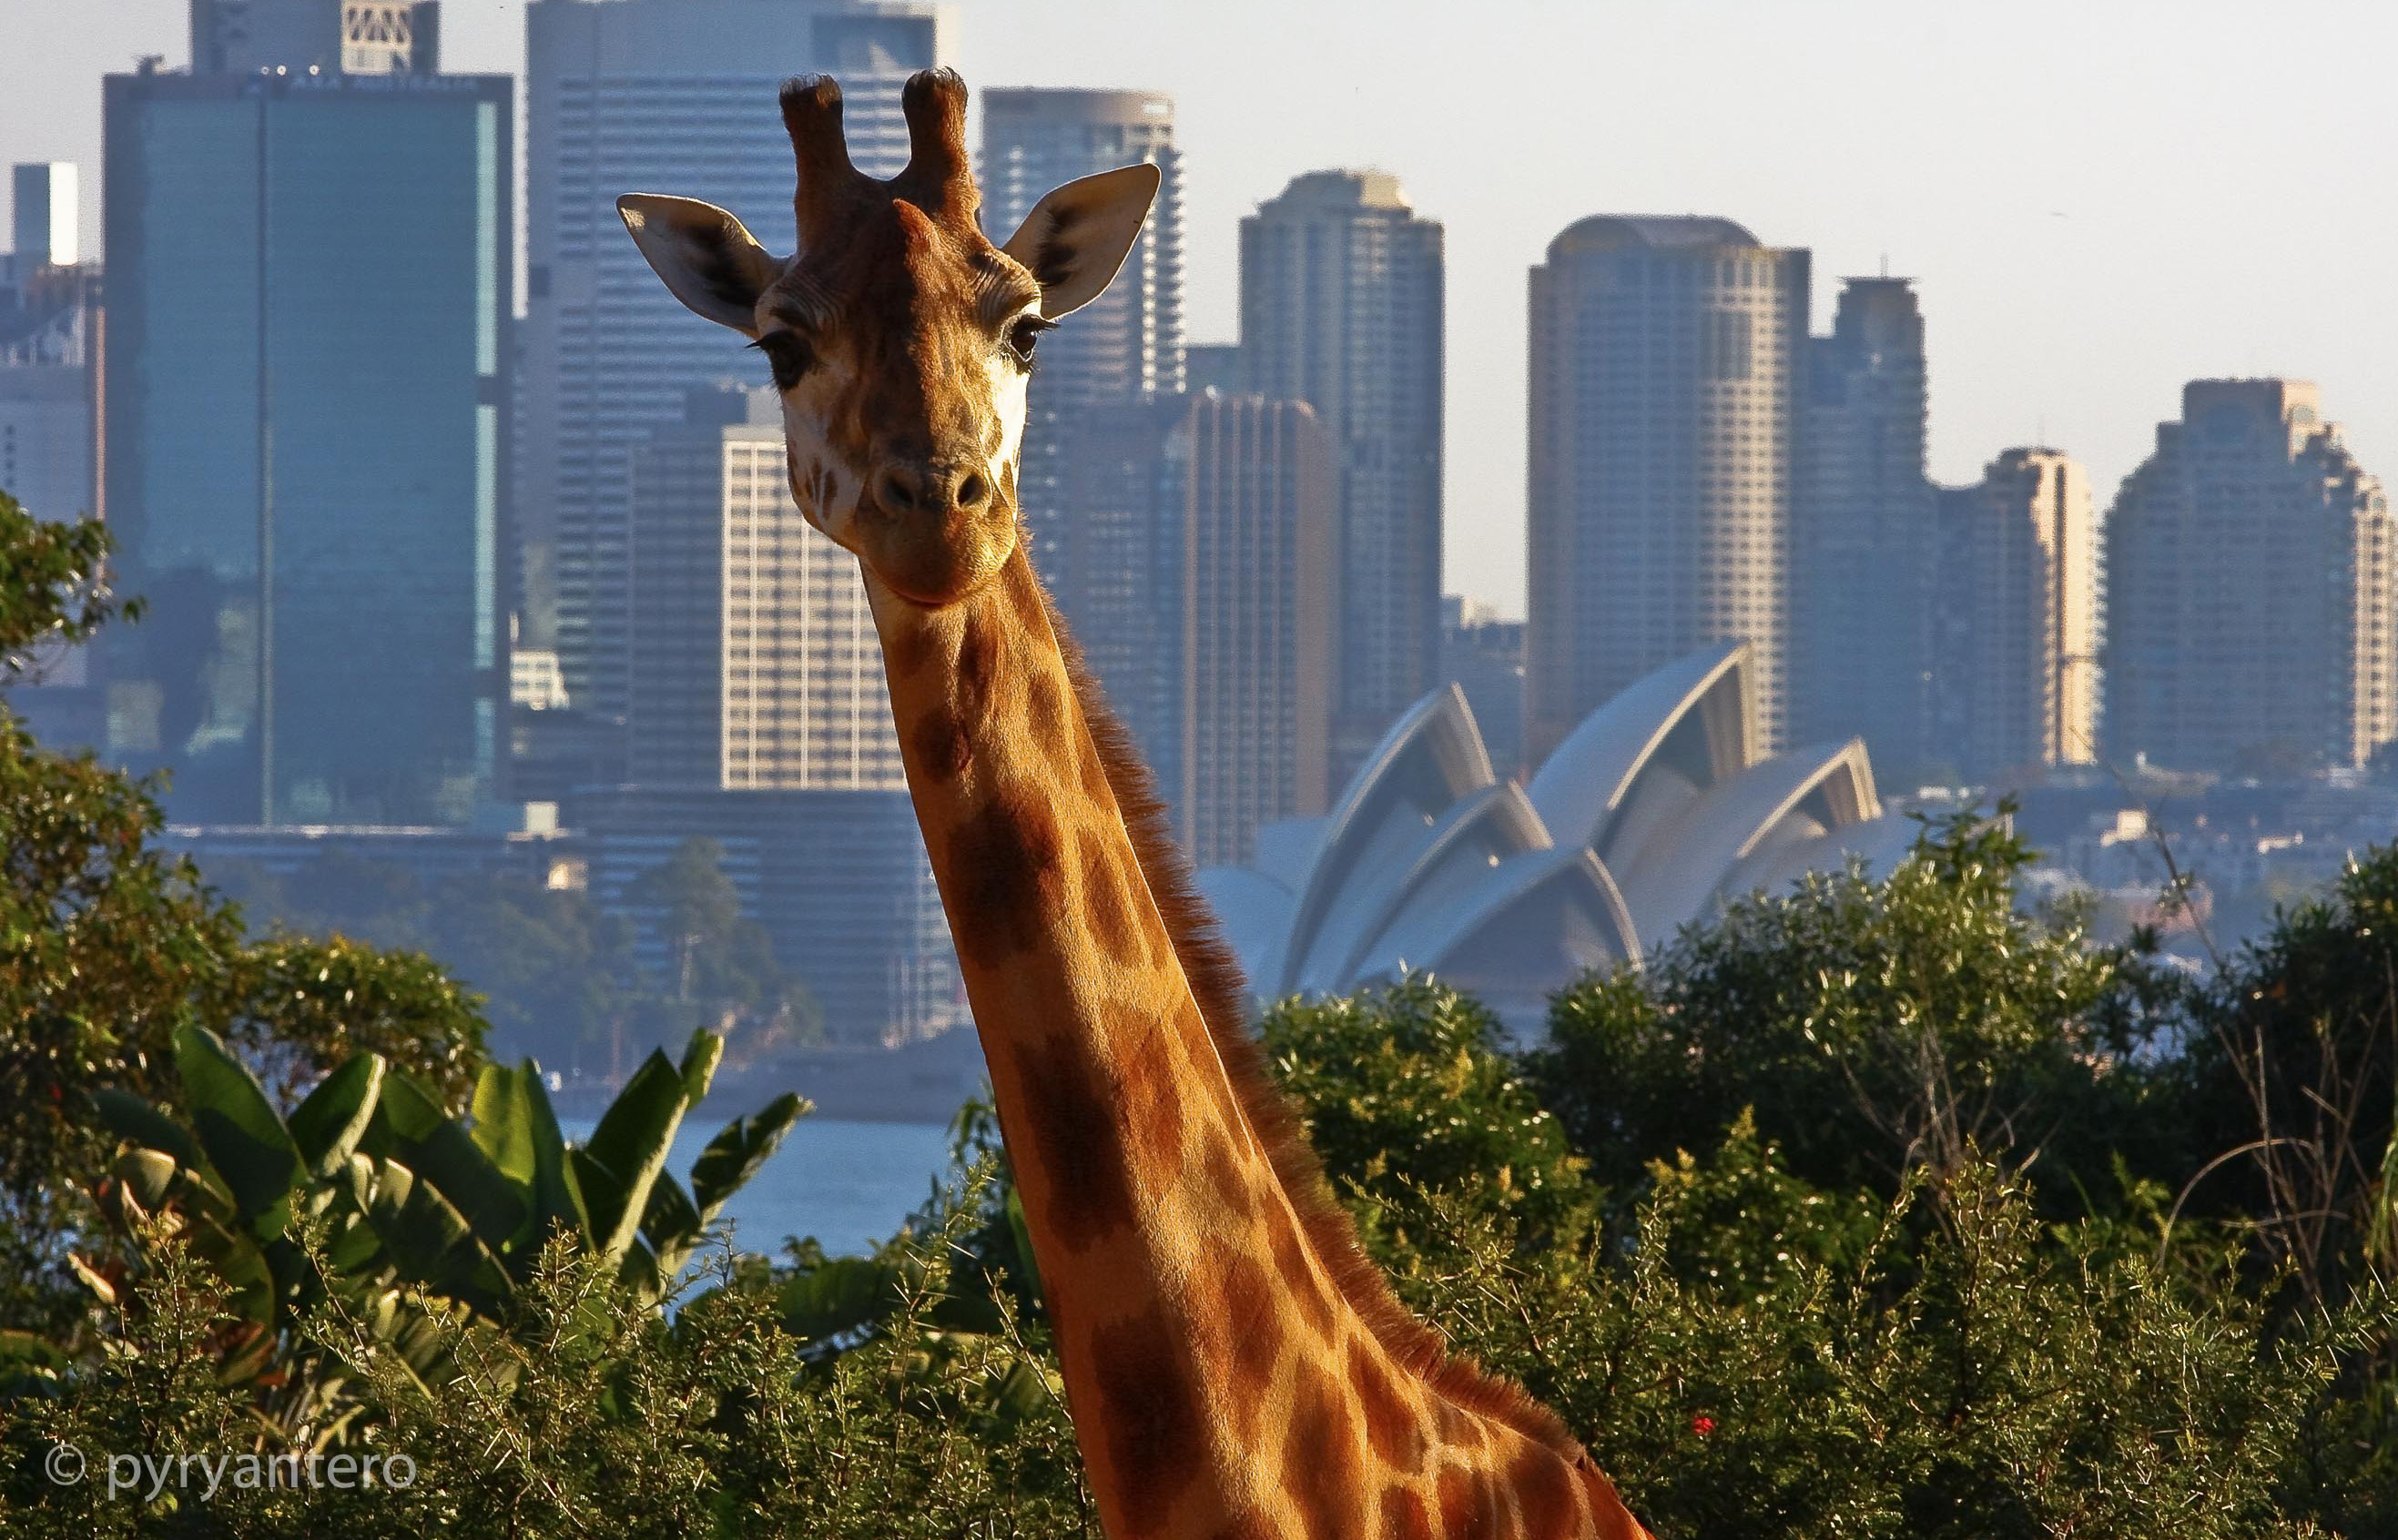 Giraffe in Taronga Zoo. In the backgound is Sydney Opera House in Sydney, Australia. Pyry Antero Pietiläinen Photography, pyryantero